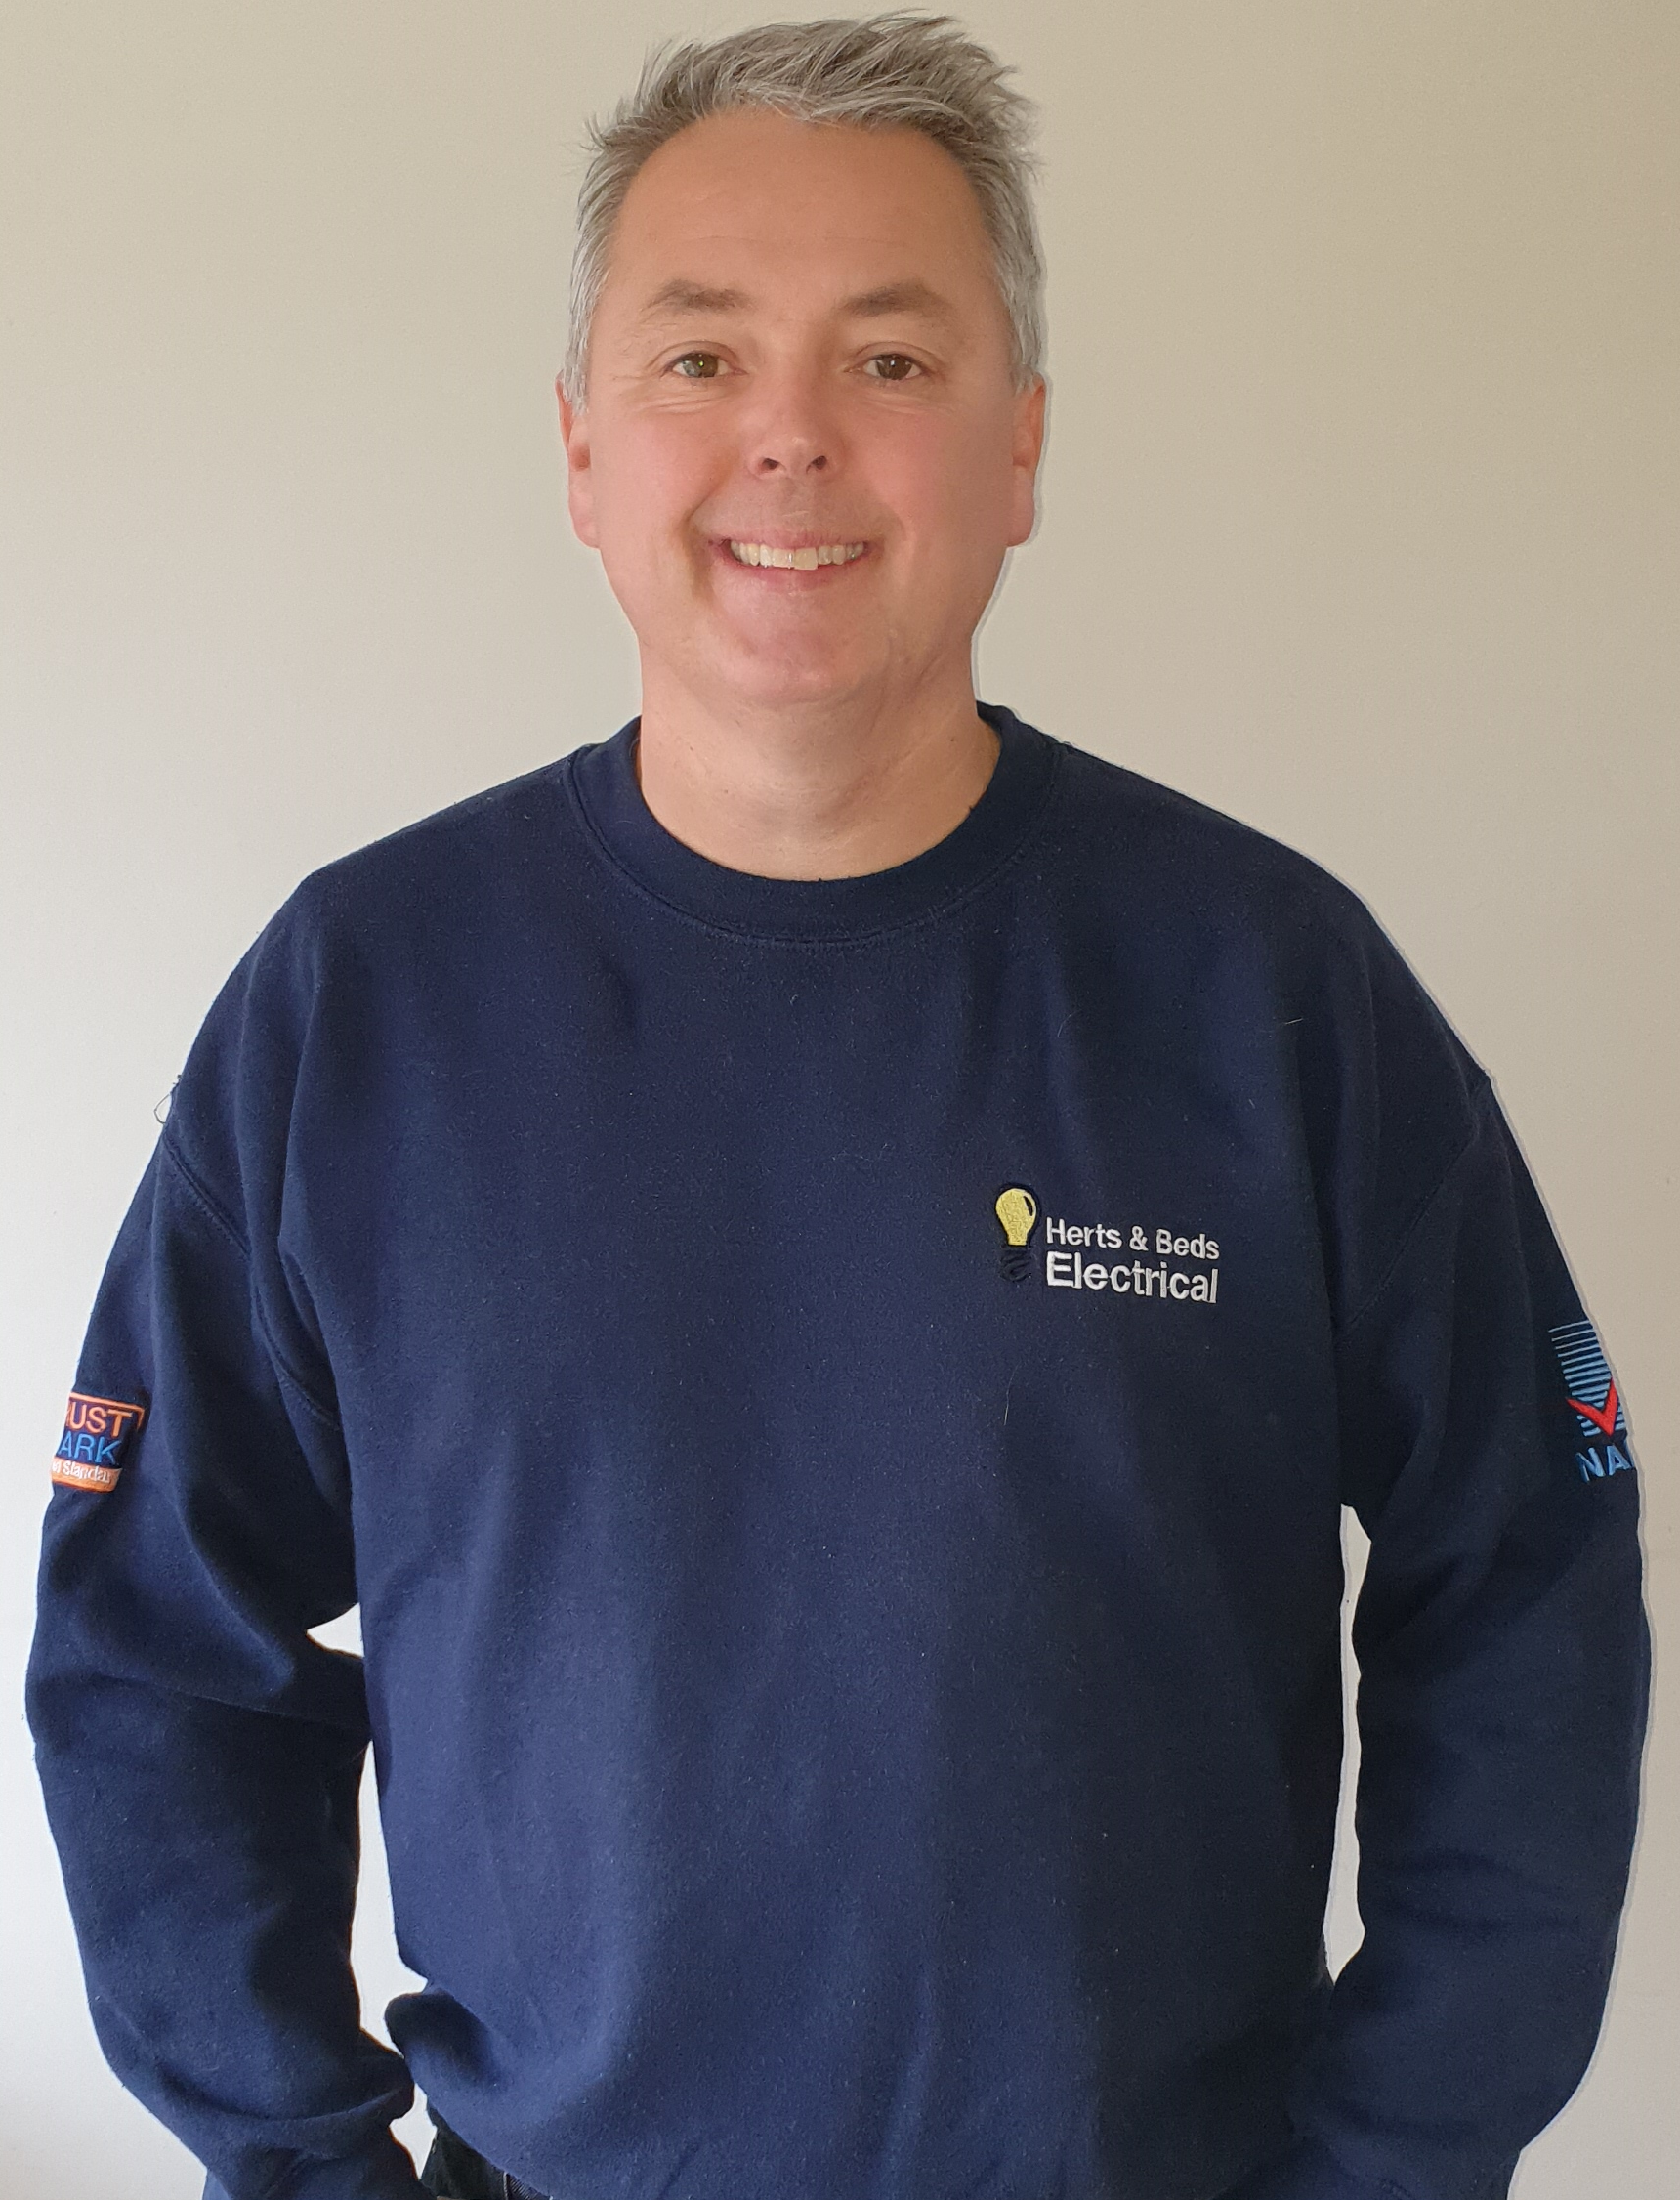 Nigel Rooney - electrician in Bedfordshire